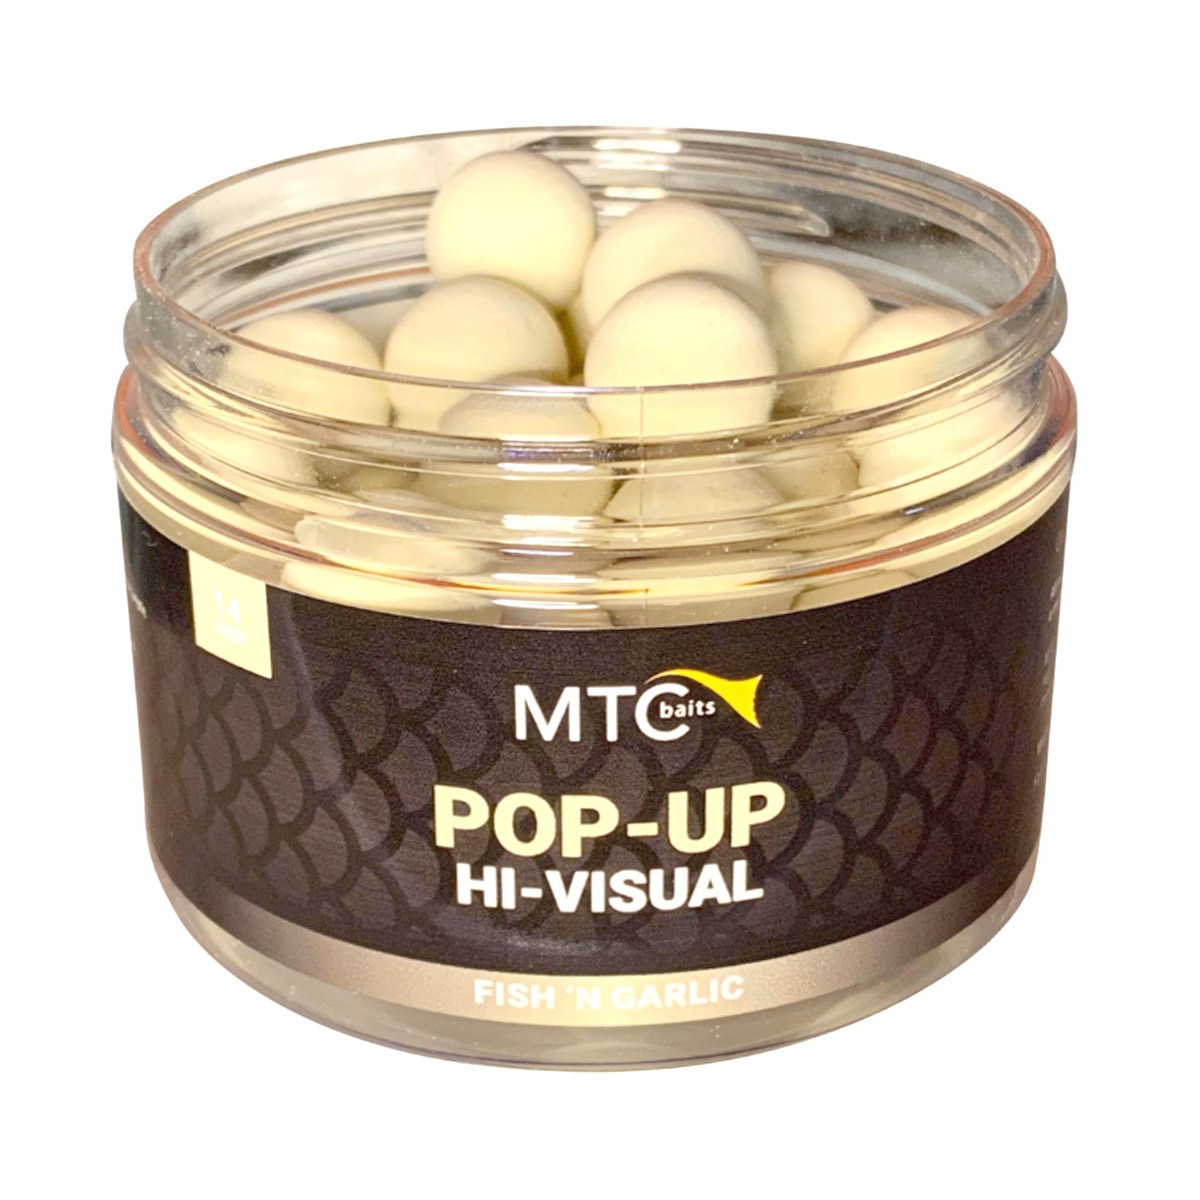 MTC Baits Pop-Up Hi-Visual Fish 'n Garlic 12 MM